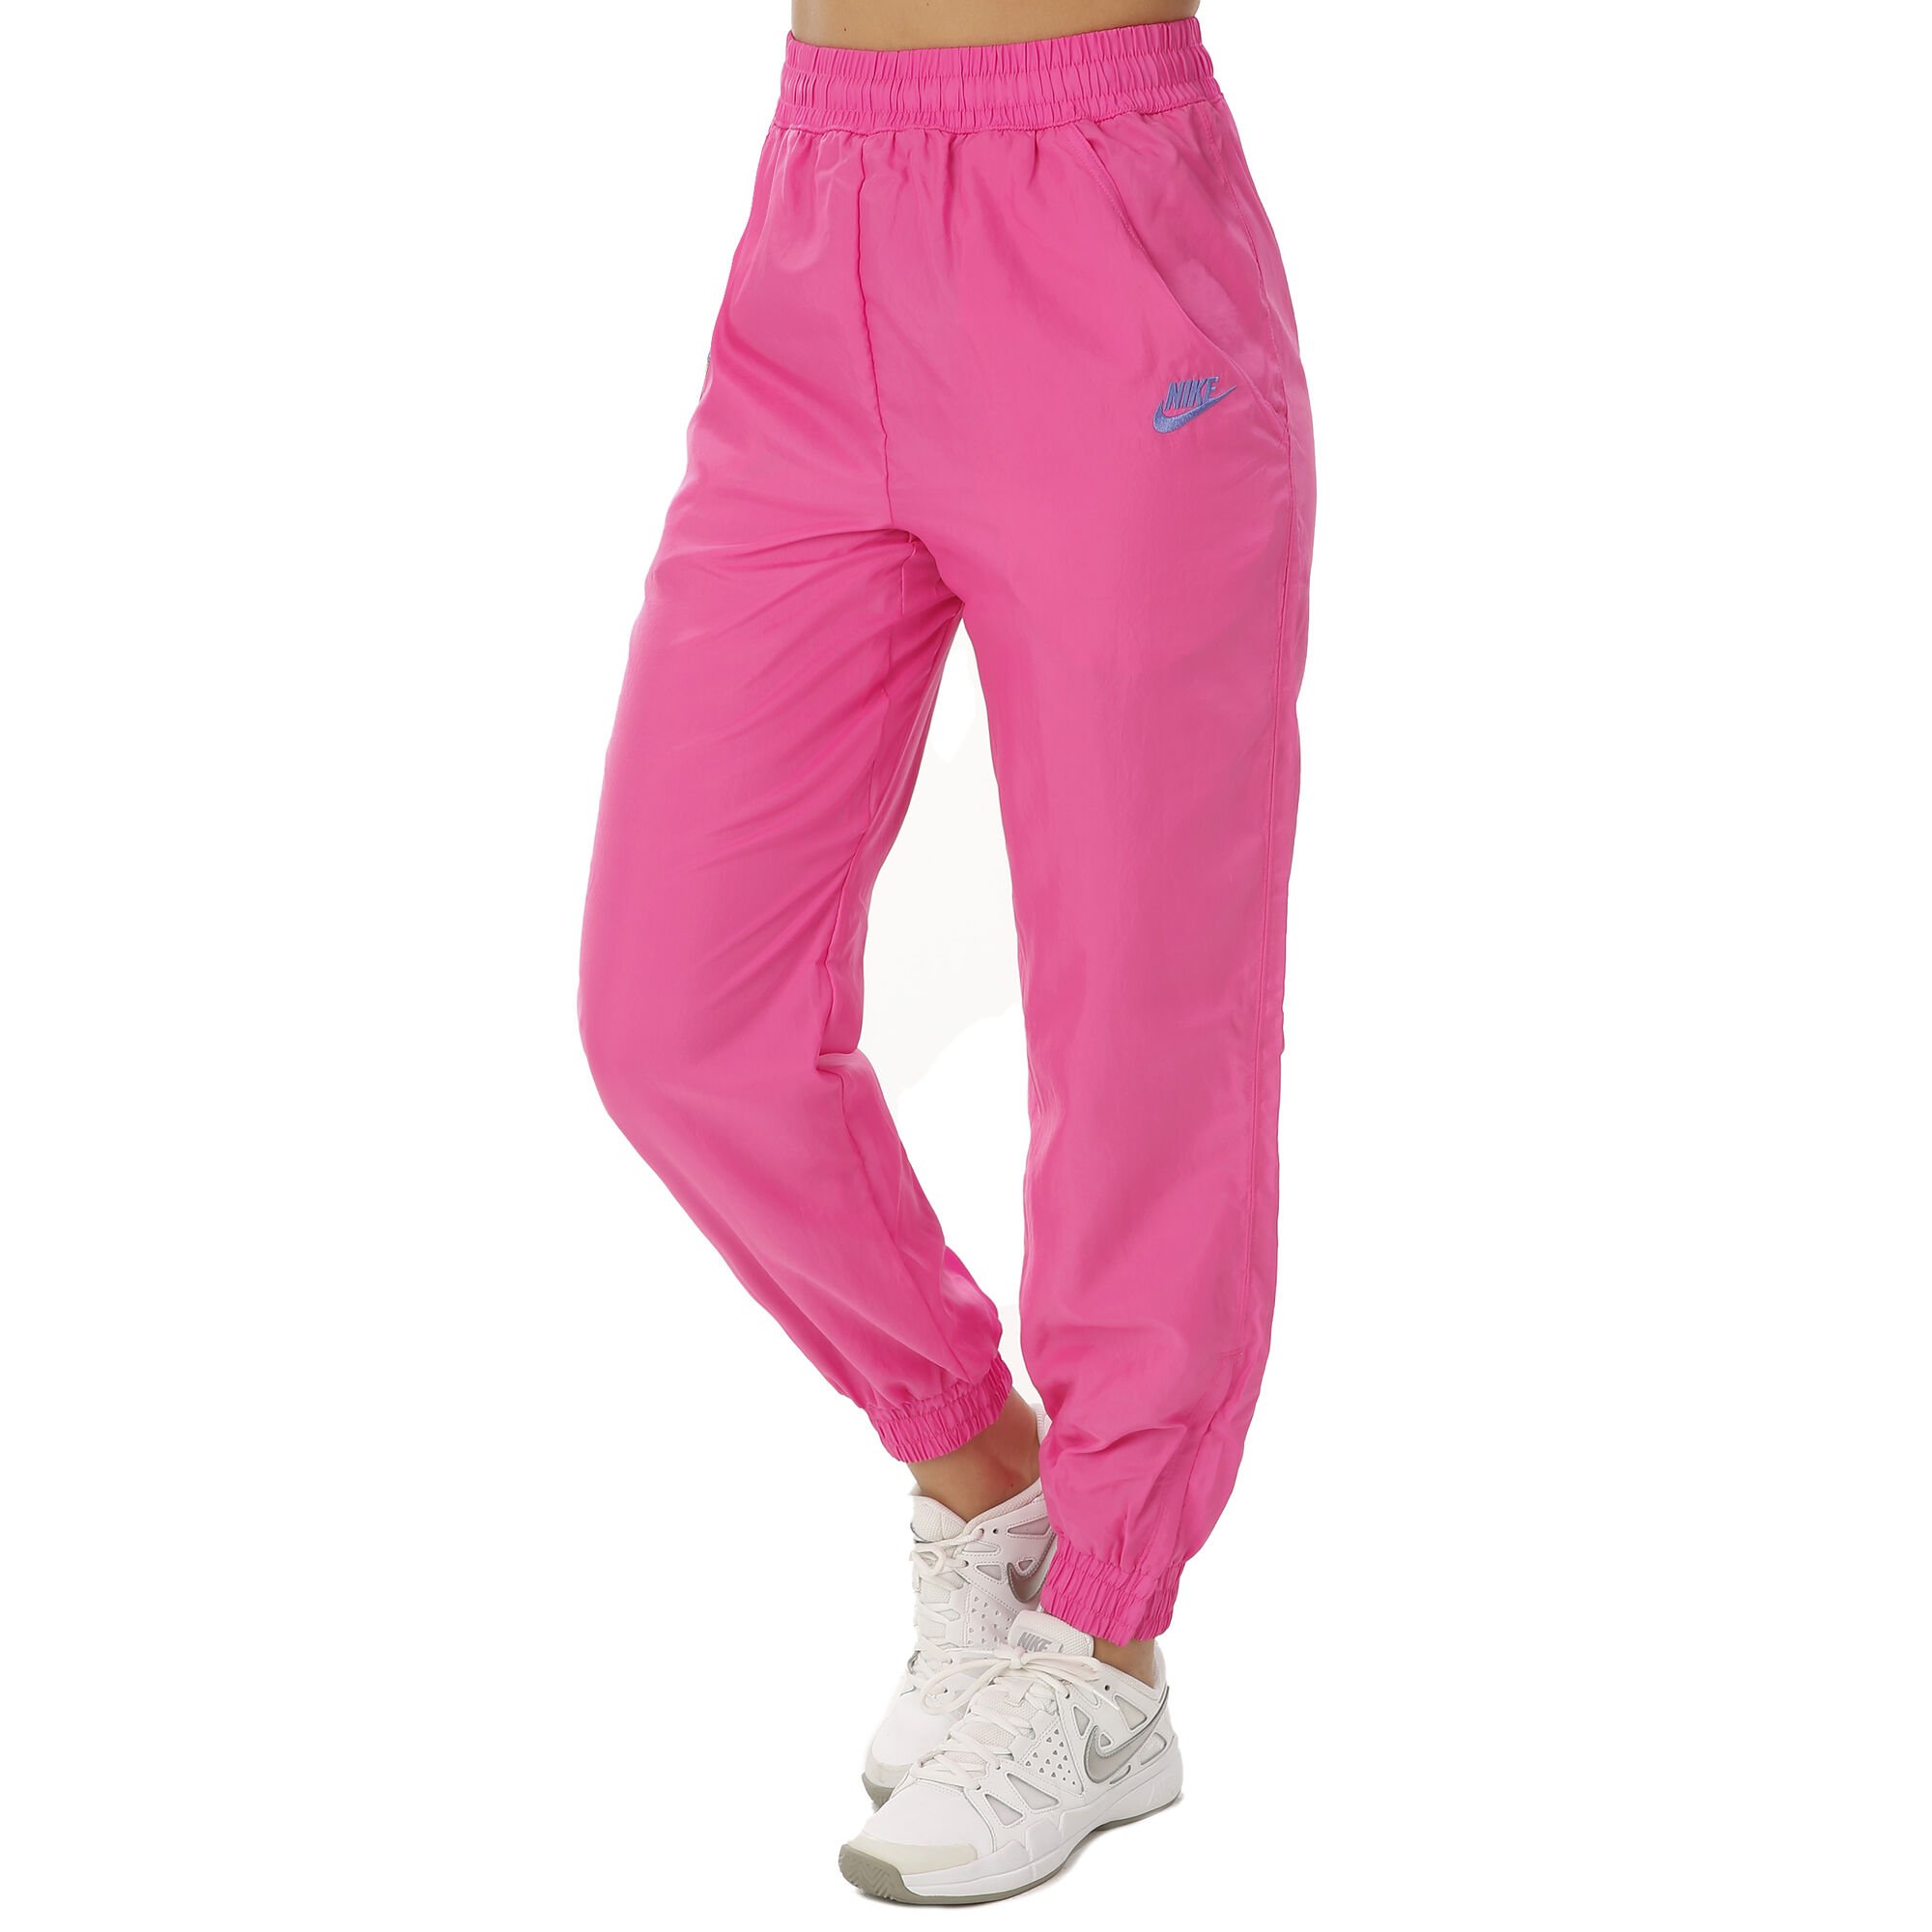 Buy Nike Court Training Pants Women Neon Pink, Light Blue online